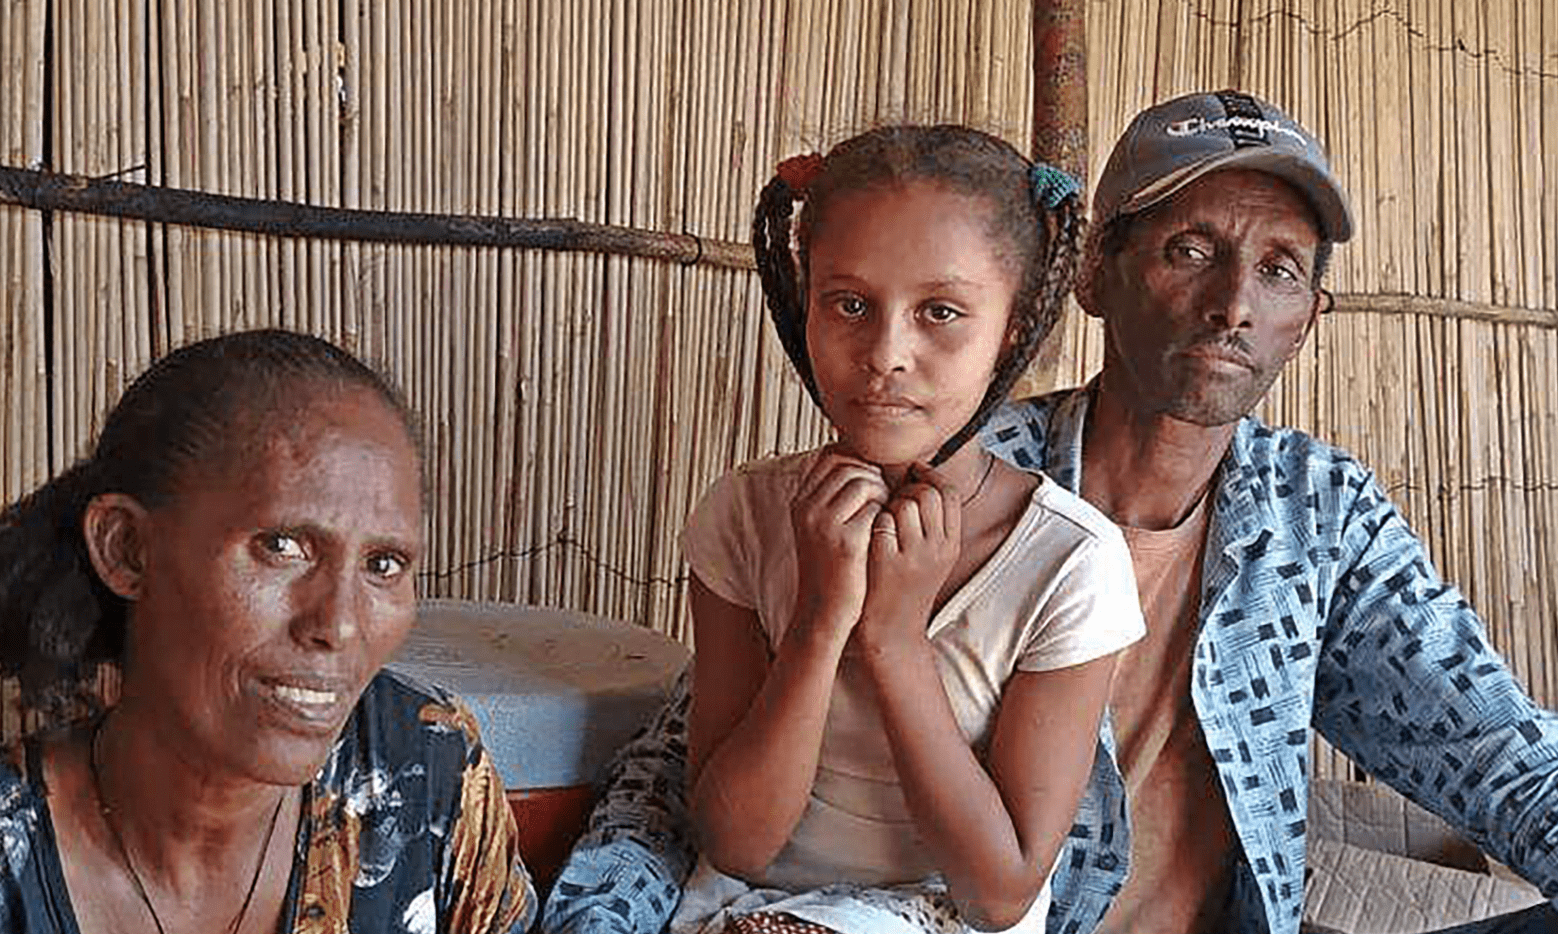 An Ethiopian refugee family in Sudan.